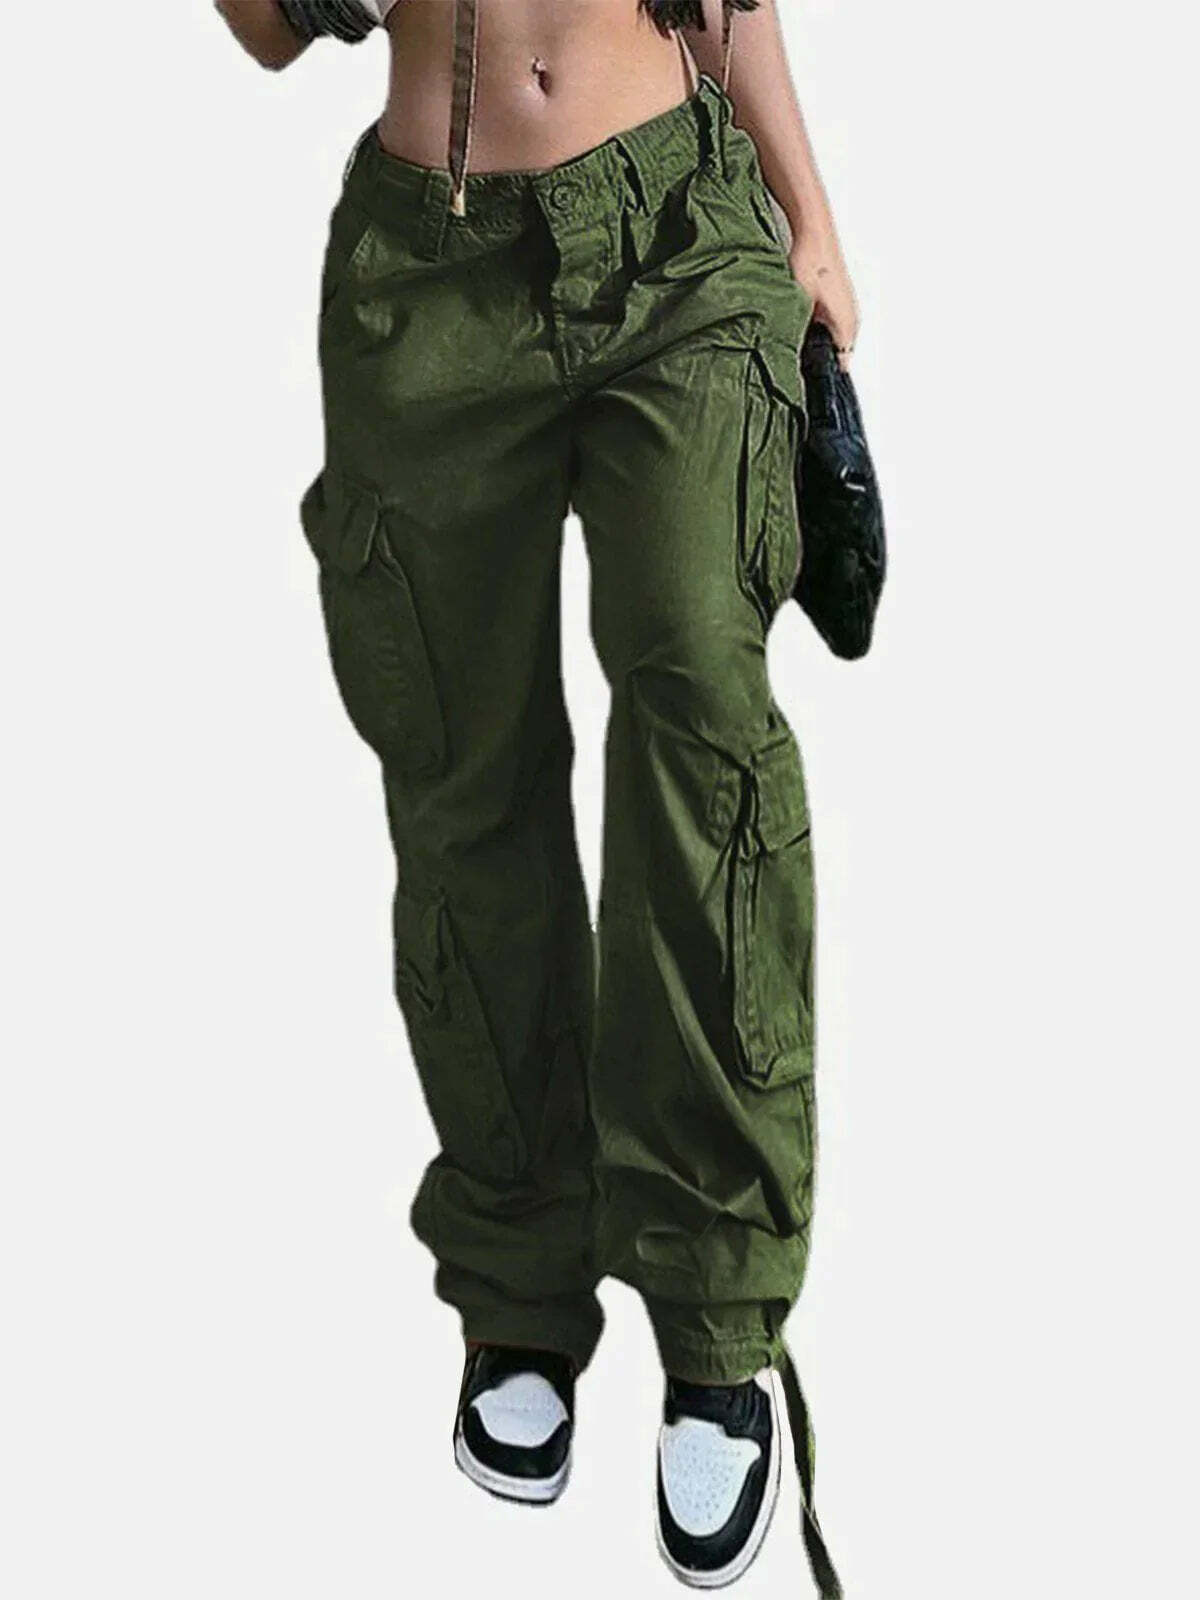 low waist cargo pants edgy & innovative streetwear 8490